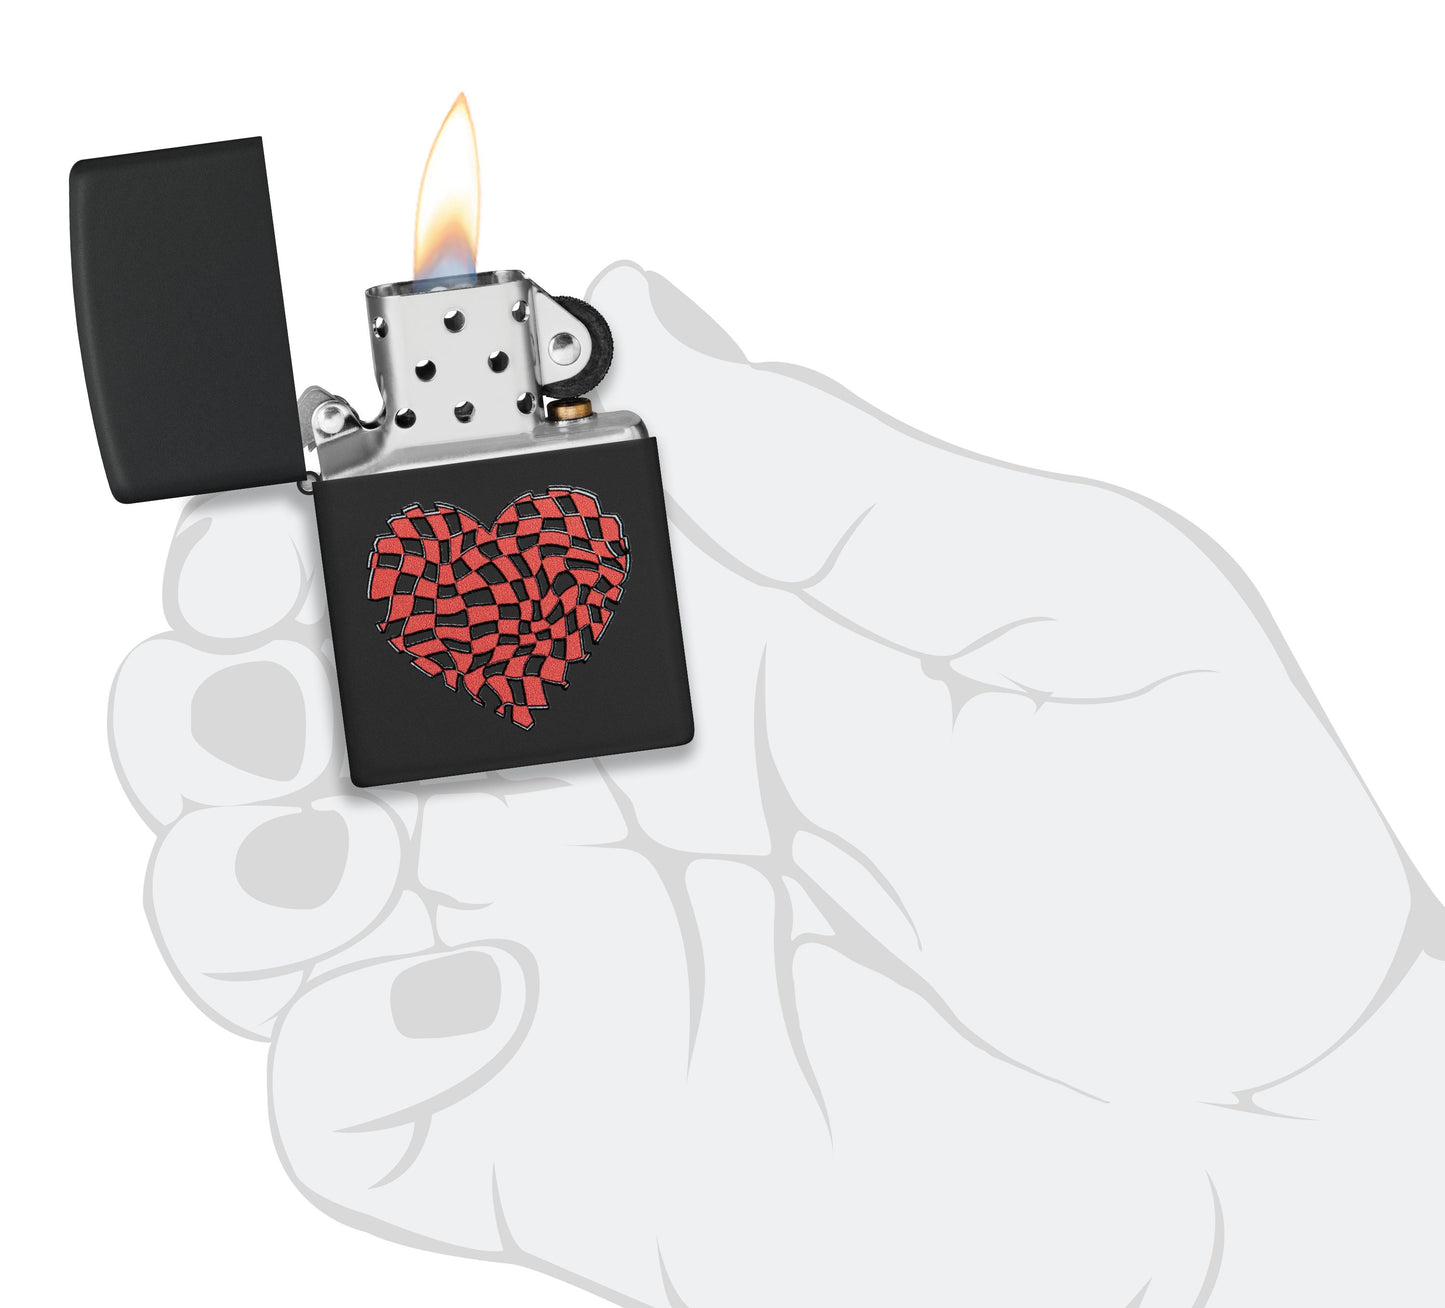 Zippo Love Heart Checkered Design, Black Matte Lighter #48719